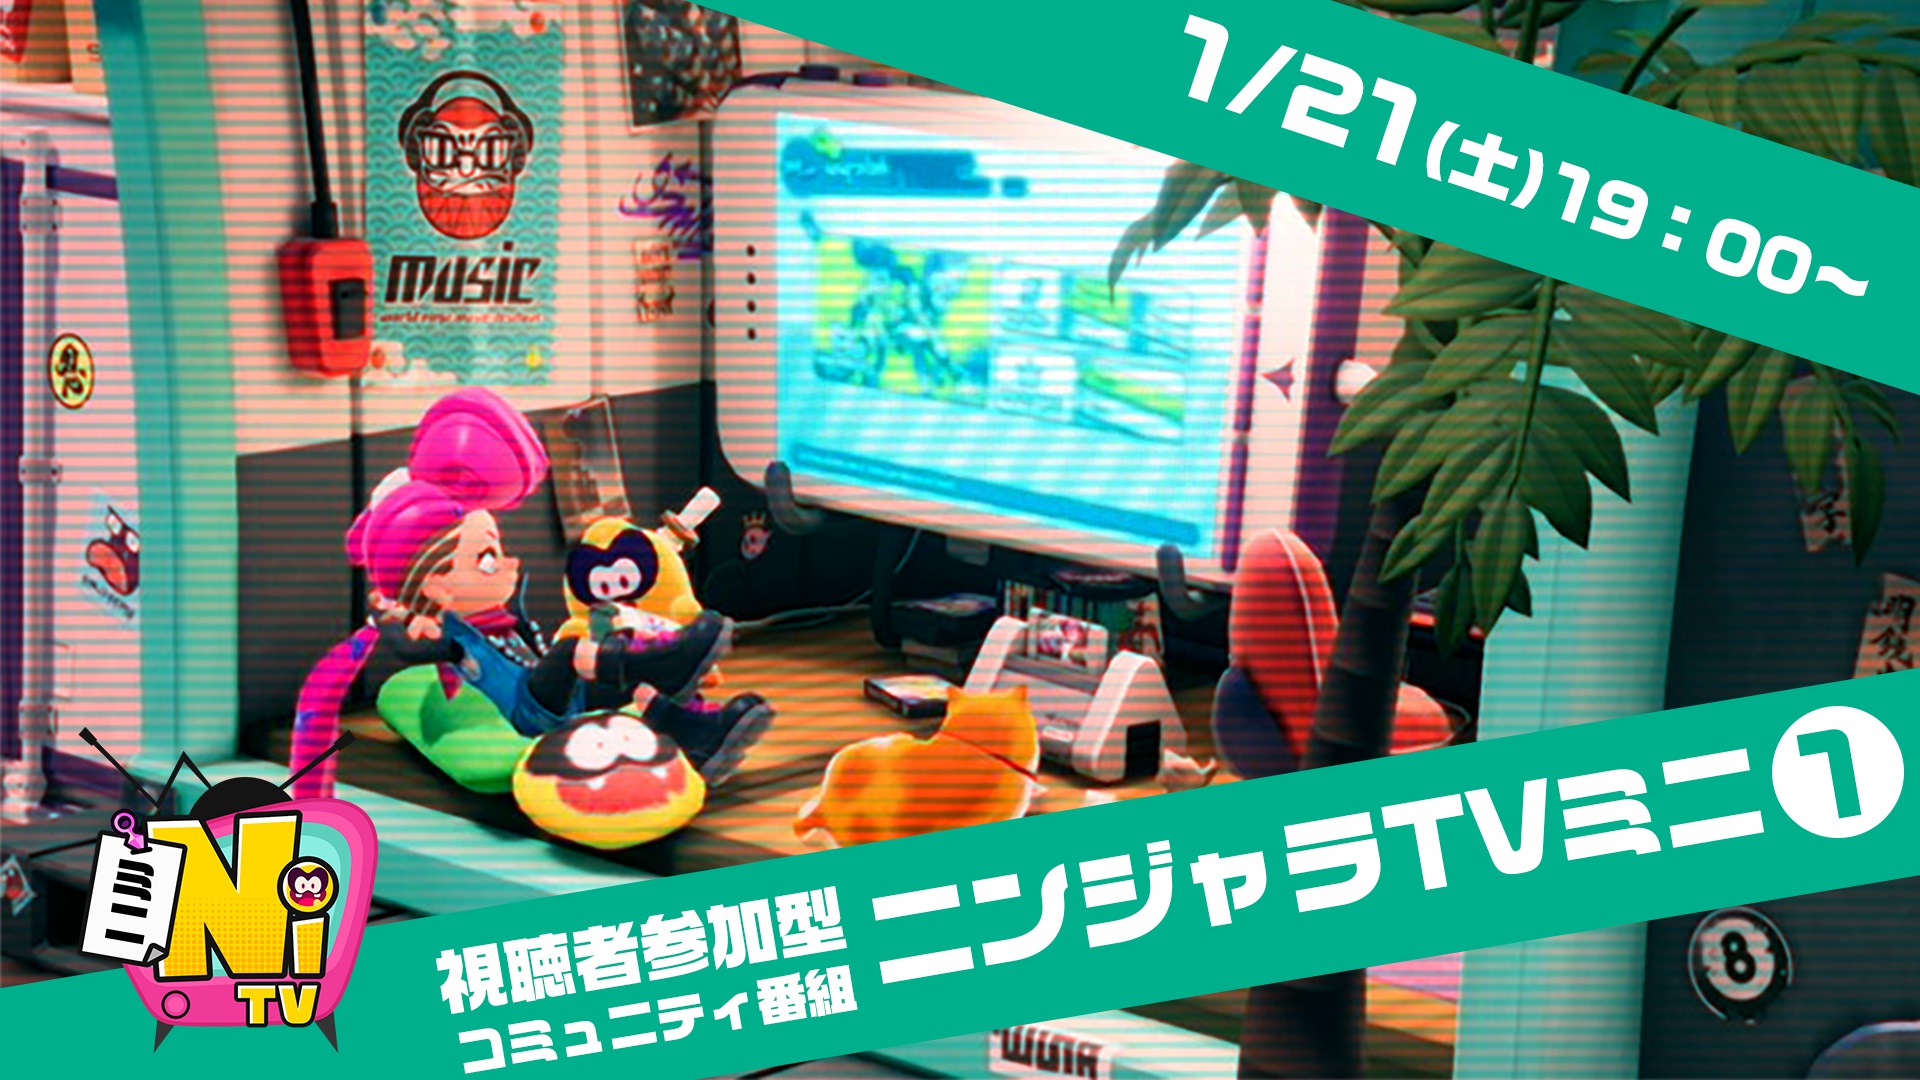 The official program “Ninjara TV Mini” will start its first broadcast at 19:00 on January 21st